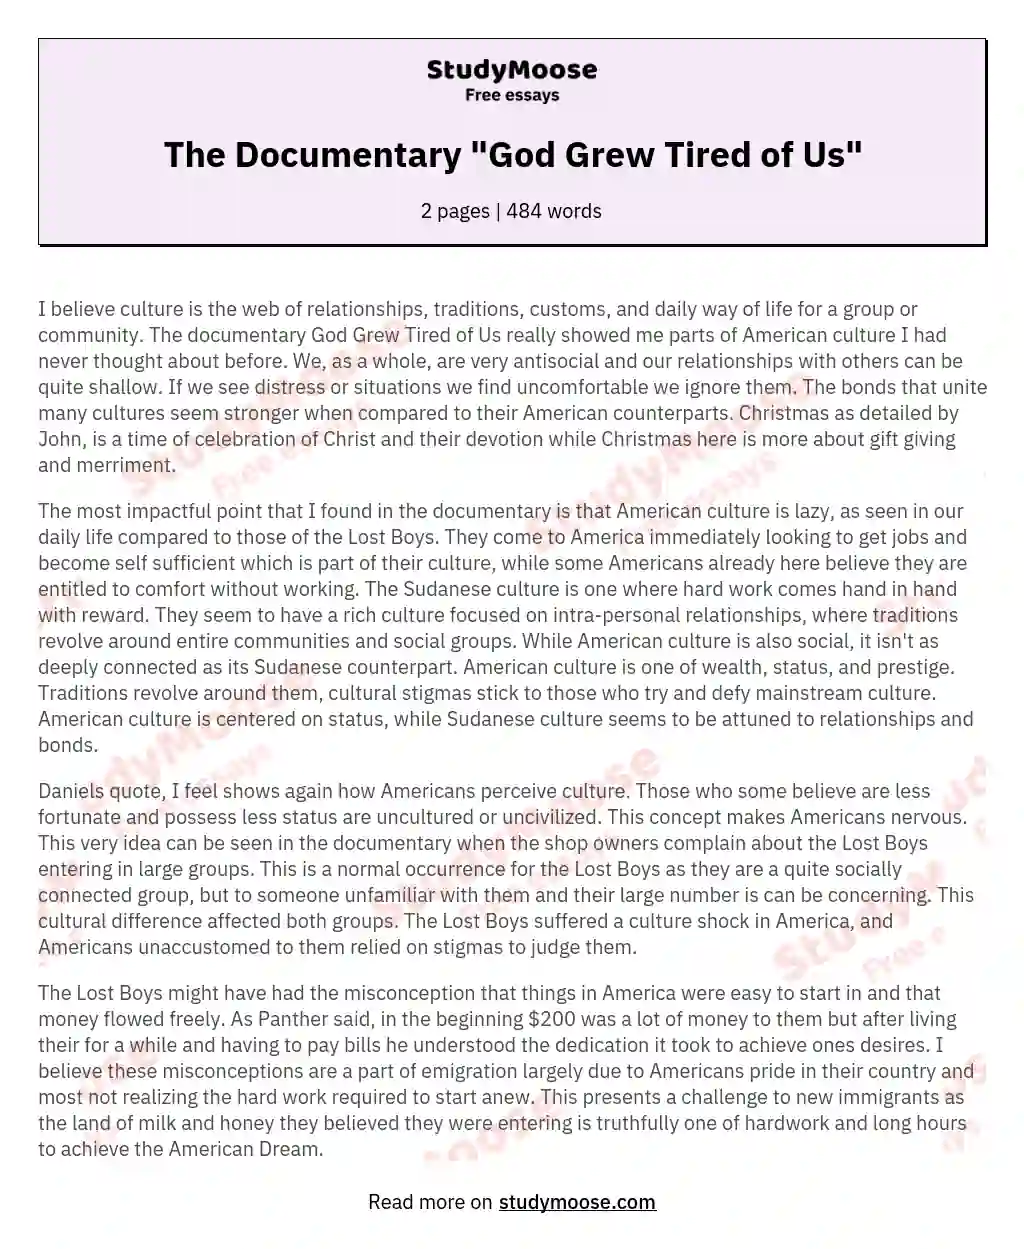 The Documentary "God Grew Tired of Us" essay